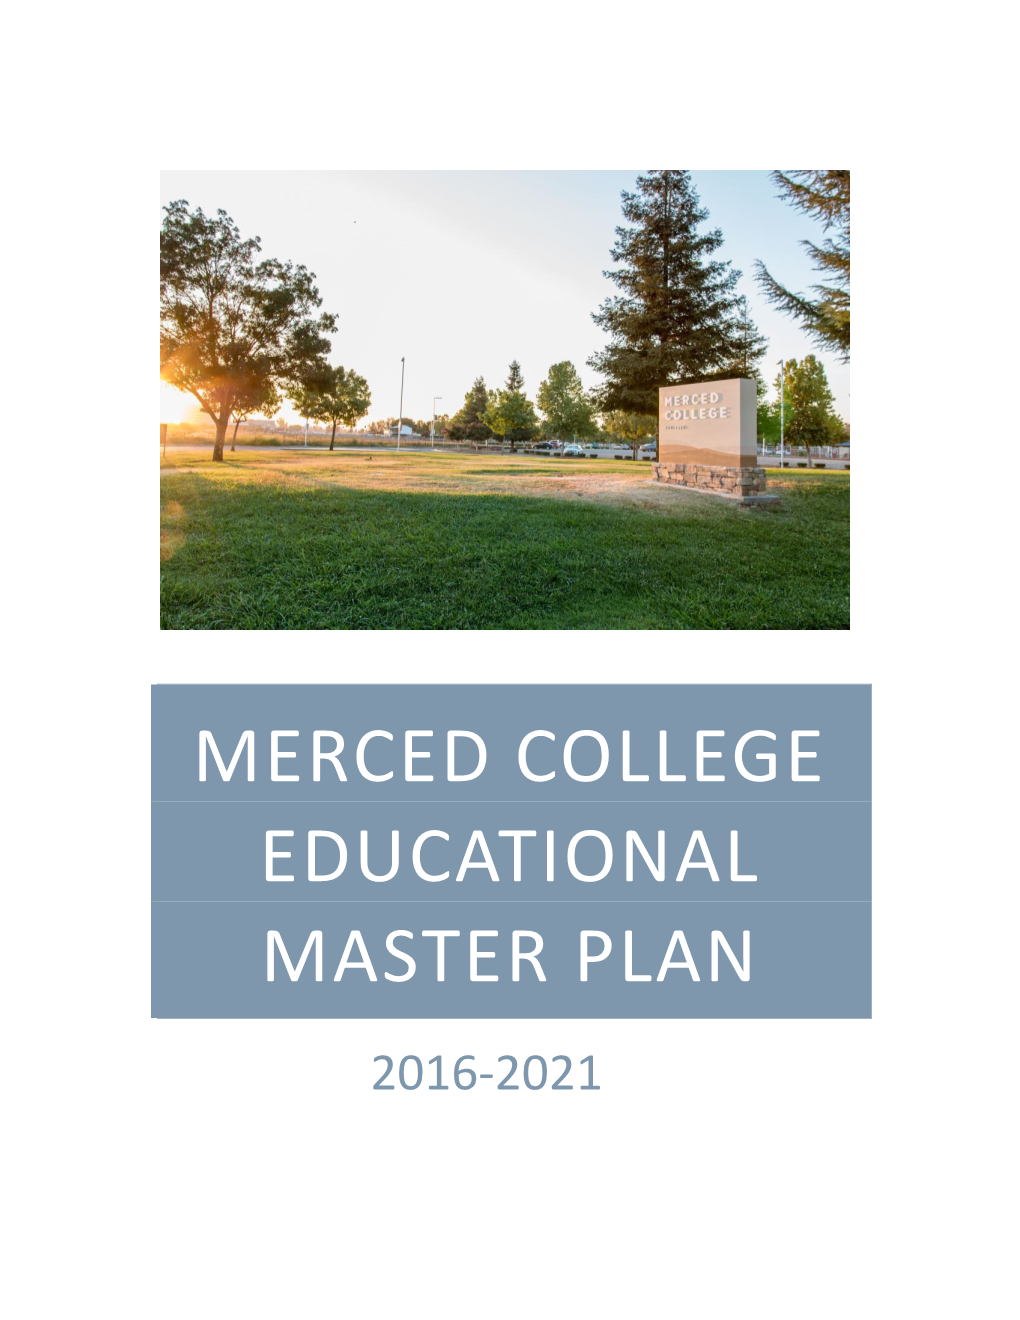 Merced College Educational Master Plan, 2016-2021